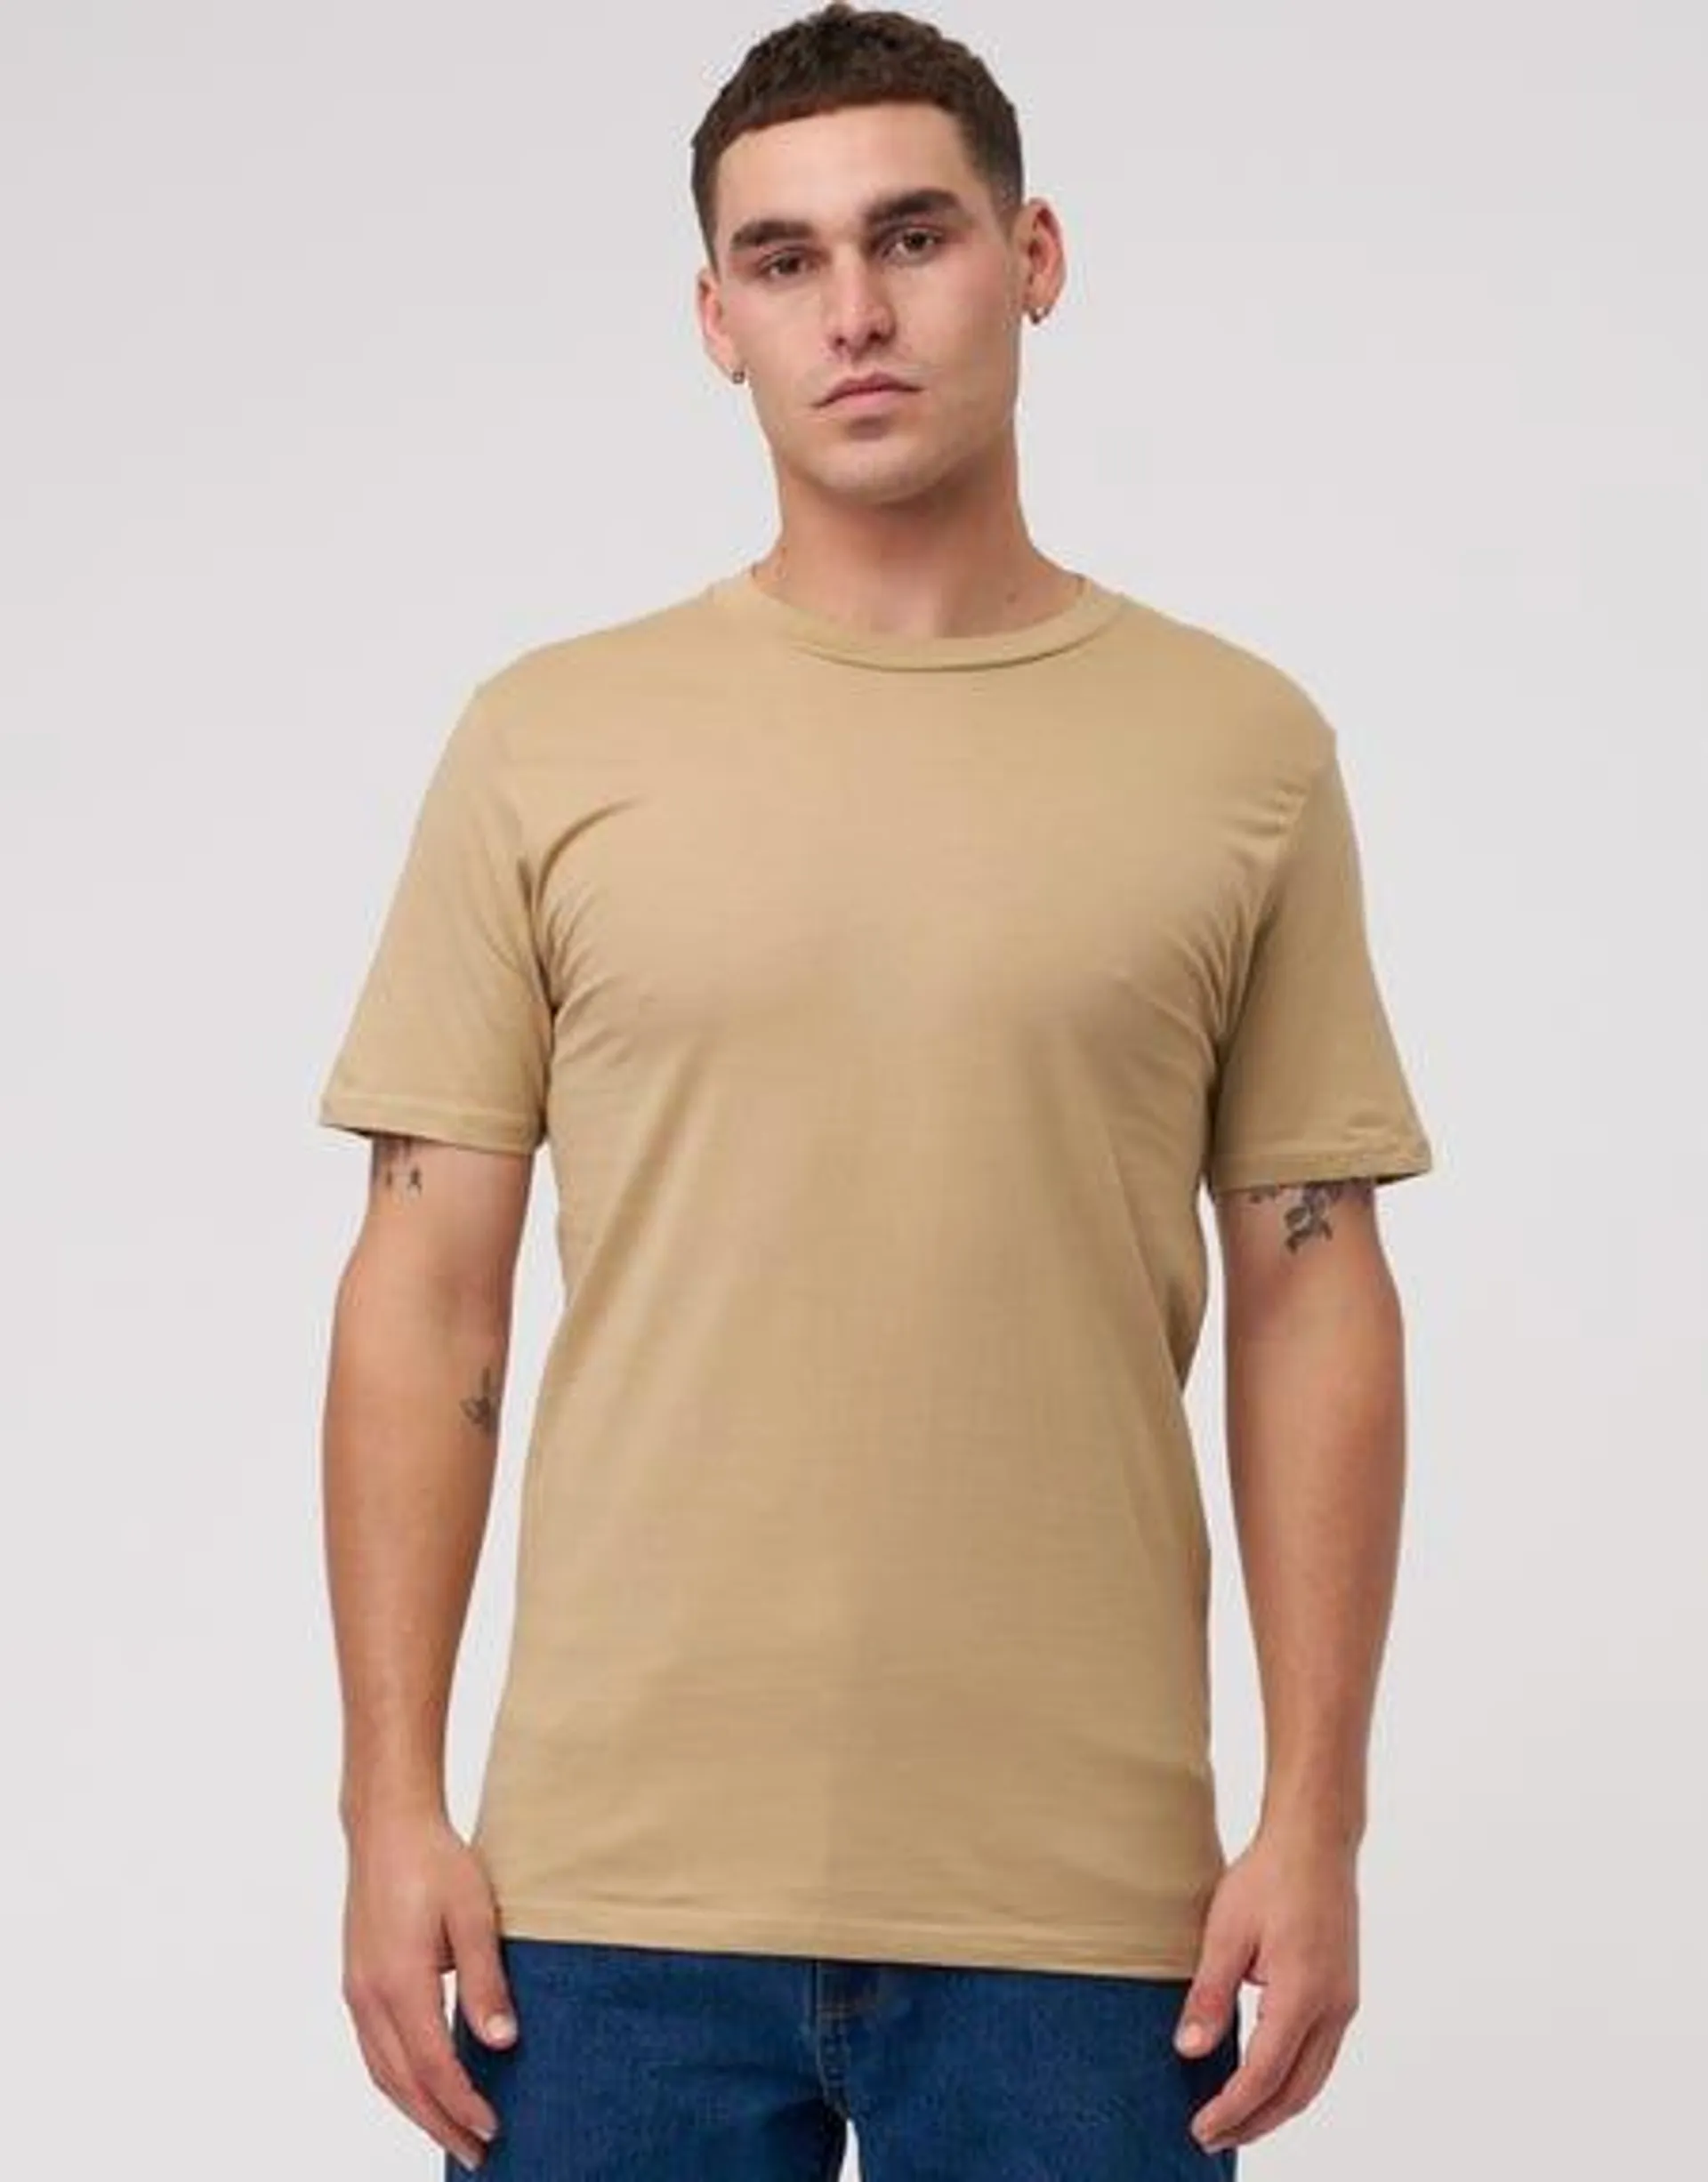 Organic Crew Neck Basic T Shirt in Tan